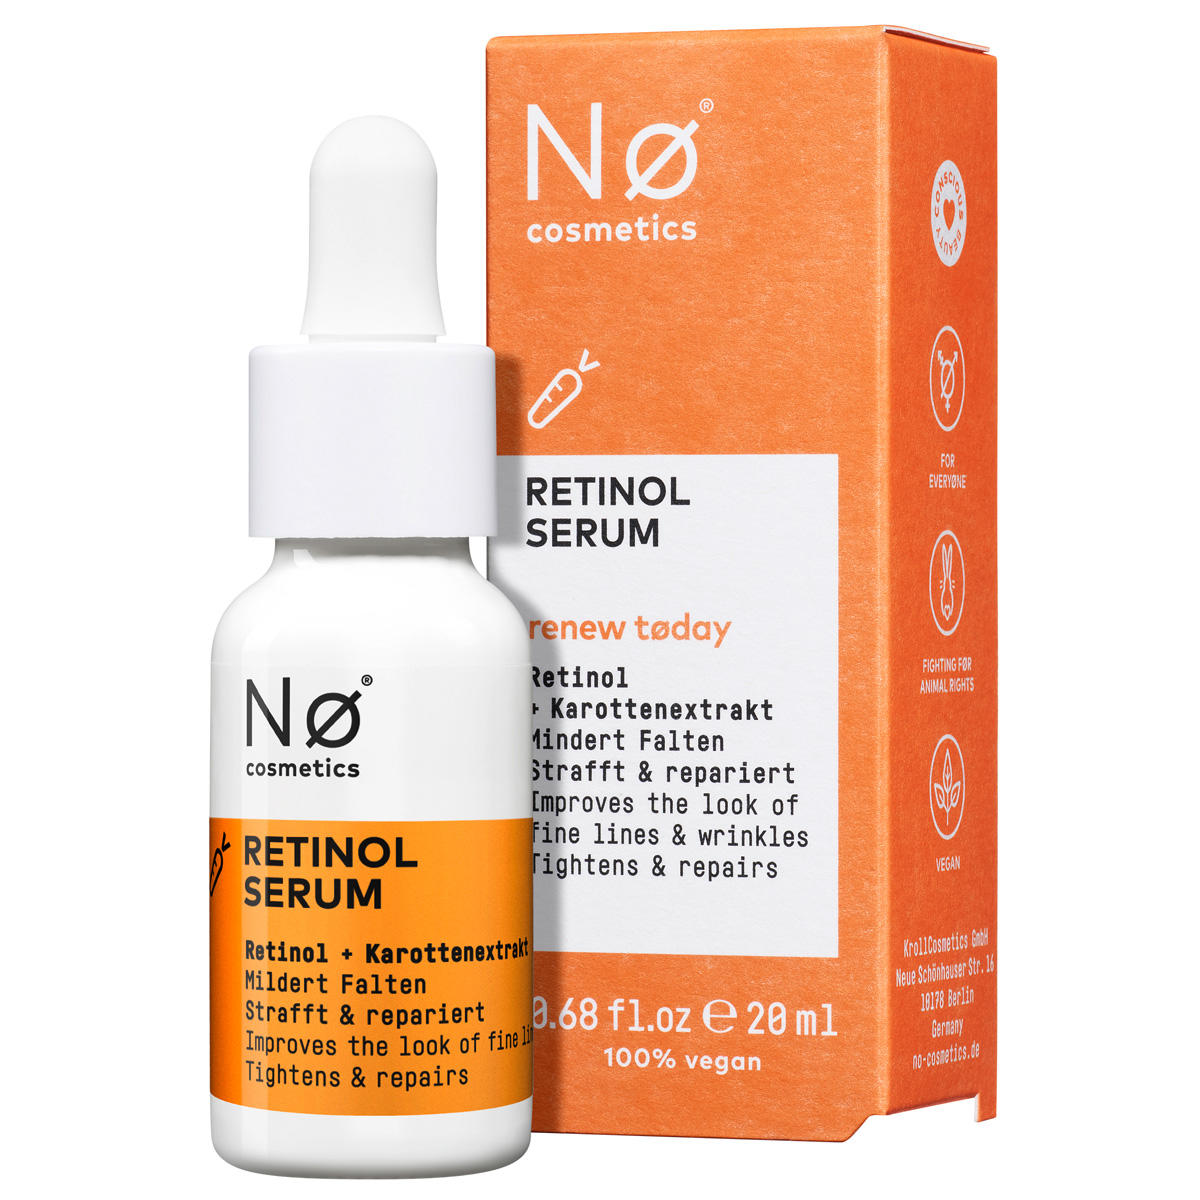 nø cosmetics renew tøday retinol serum 20 ml